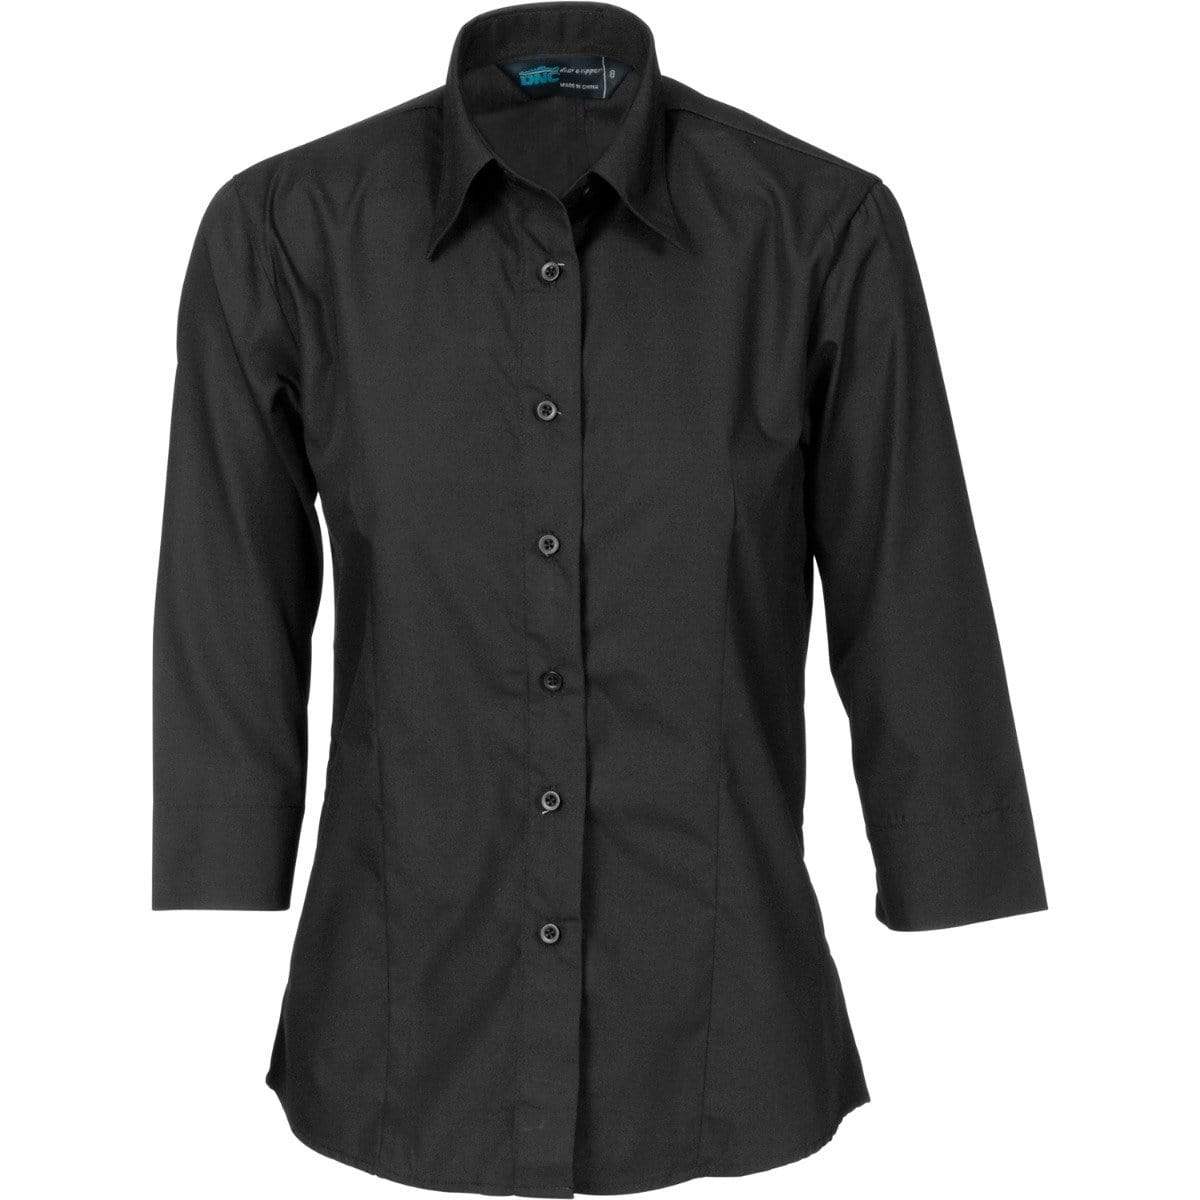 Dnc Workwear Ladies Polyester 3/4 Sleeve Cotton Shirt - 4203 Corporate Wear DNC Workwear Black 6 